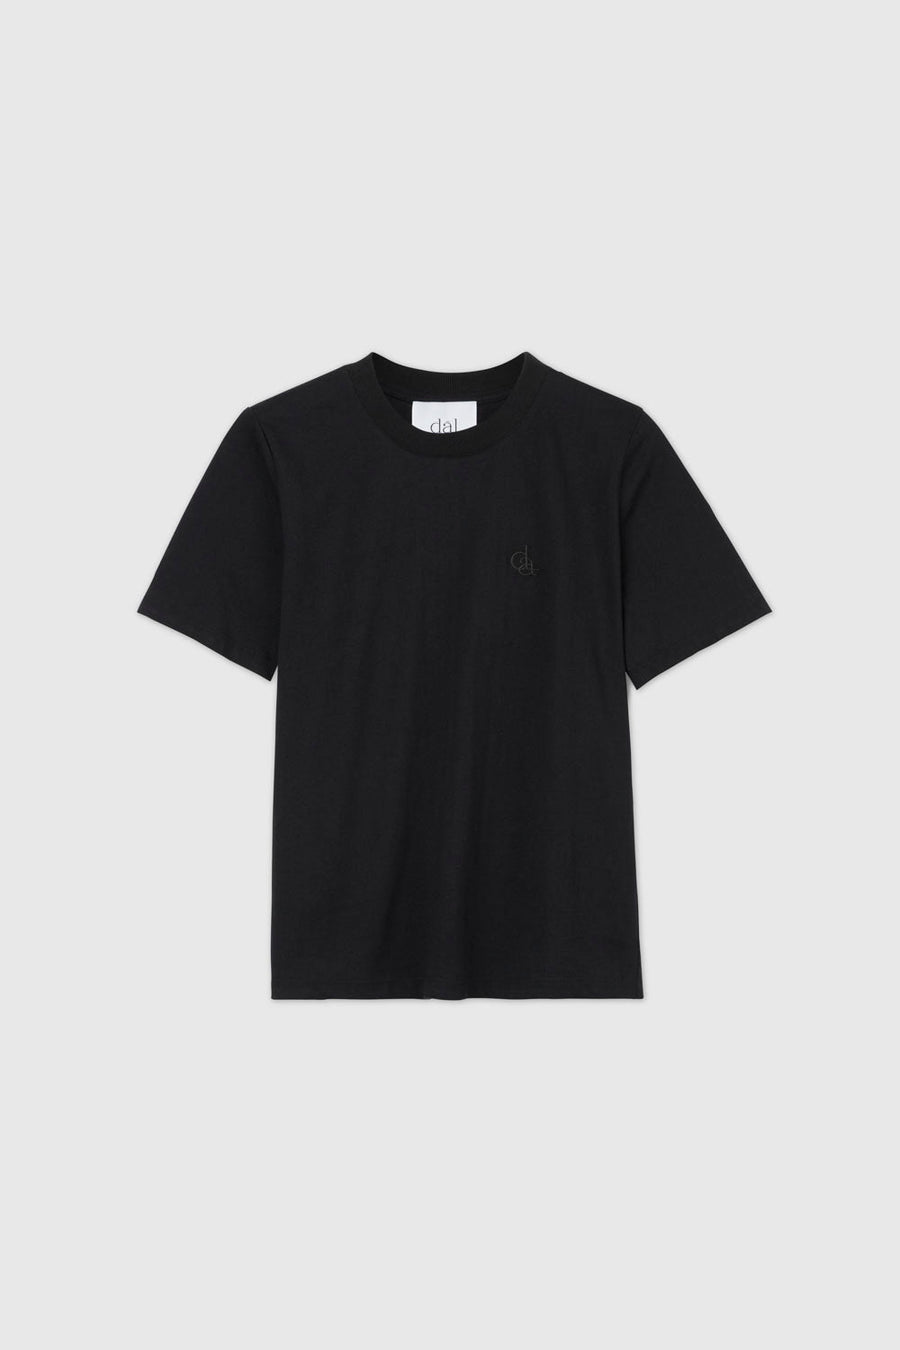 Essential Organic Cotton T-shirt - dāl the label-Black